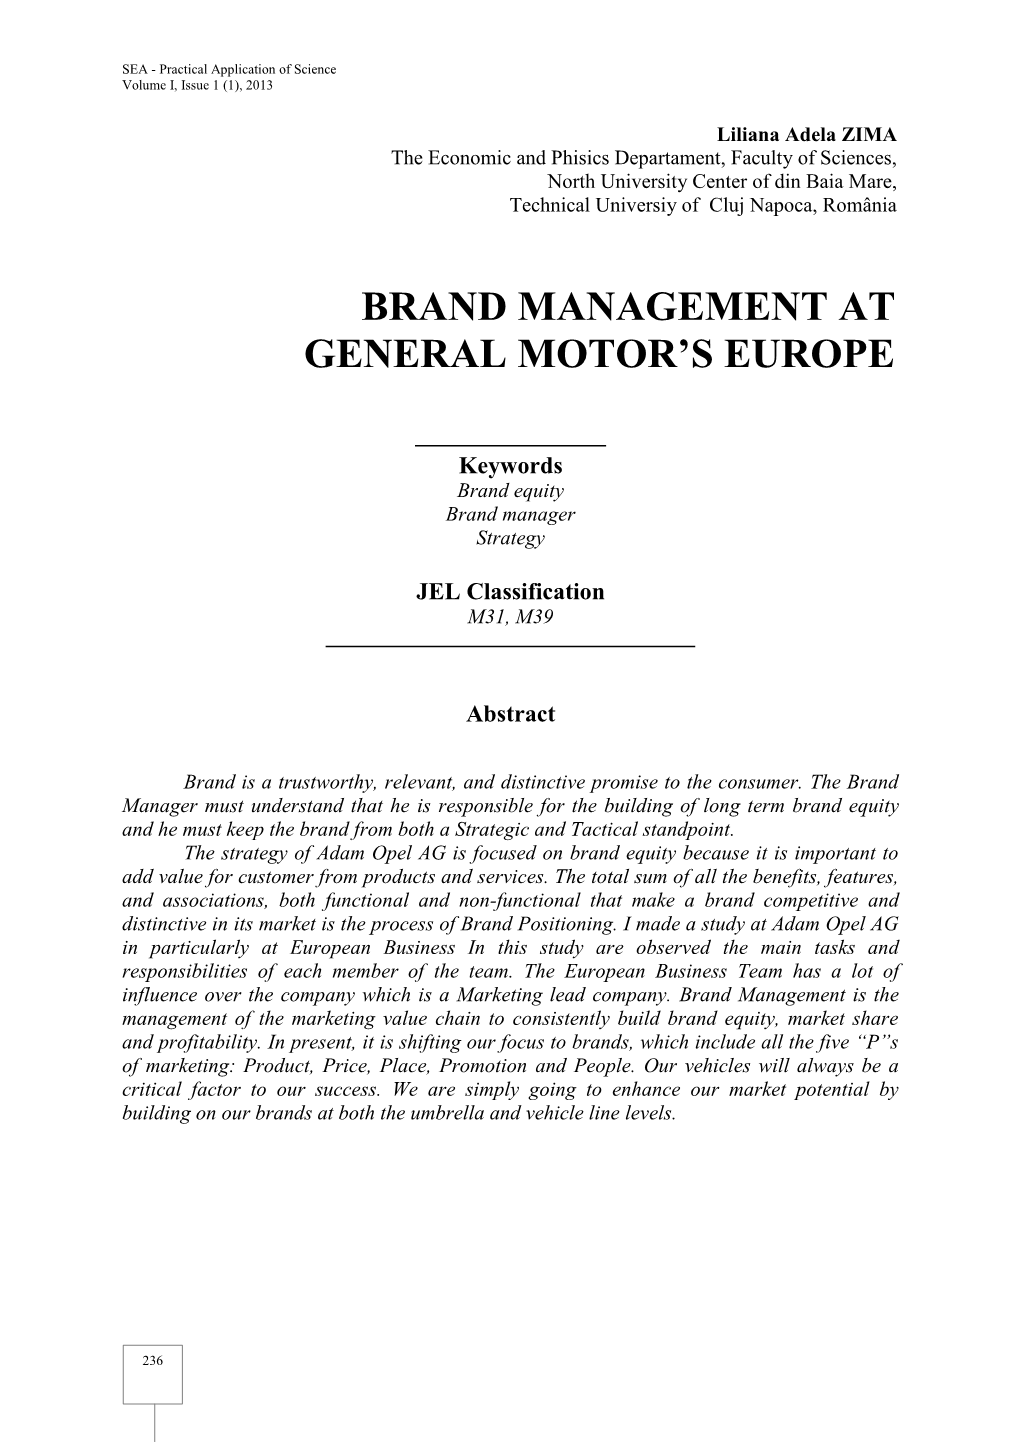 Brand Management at General Motor's Europe